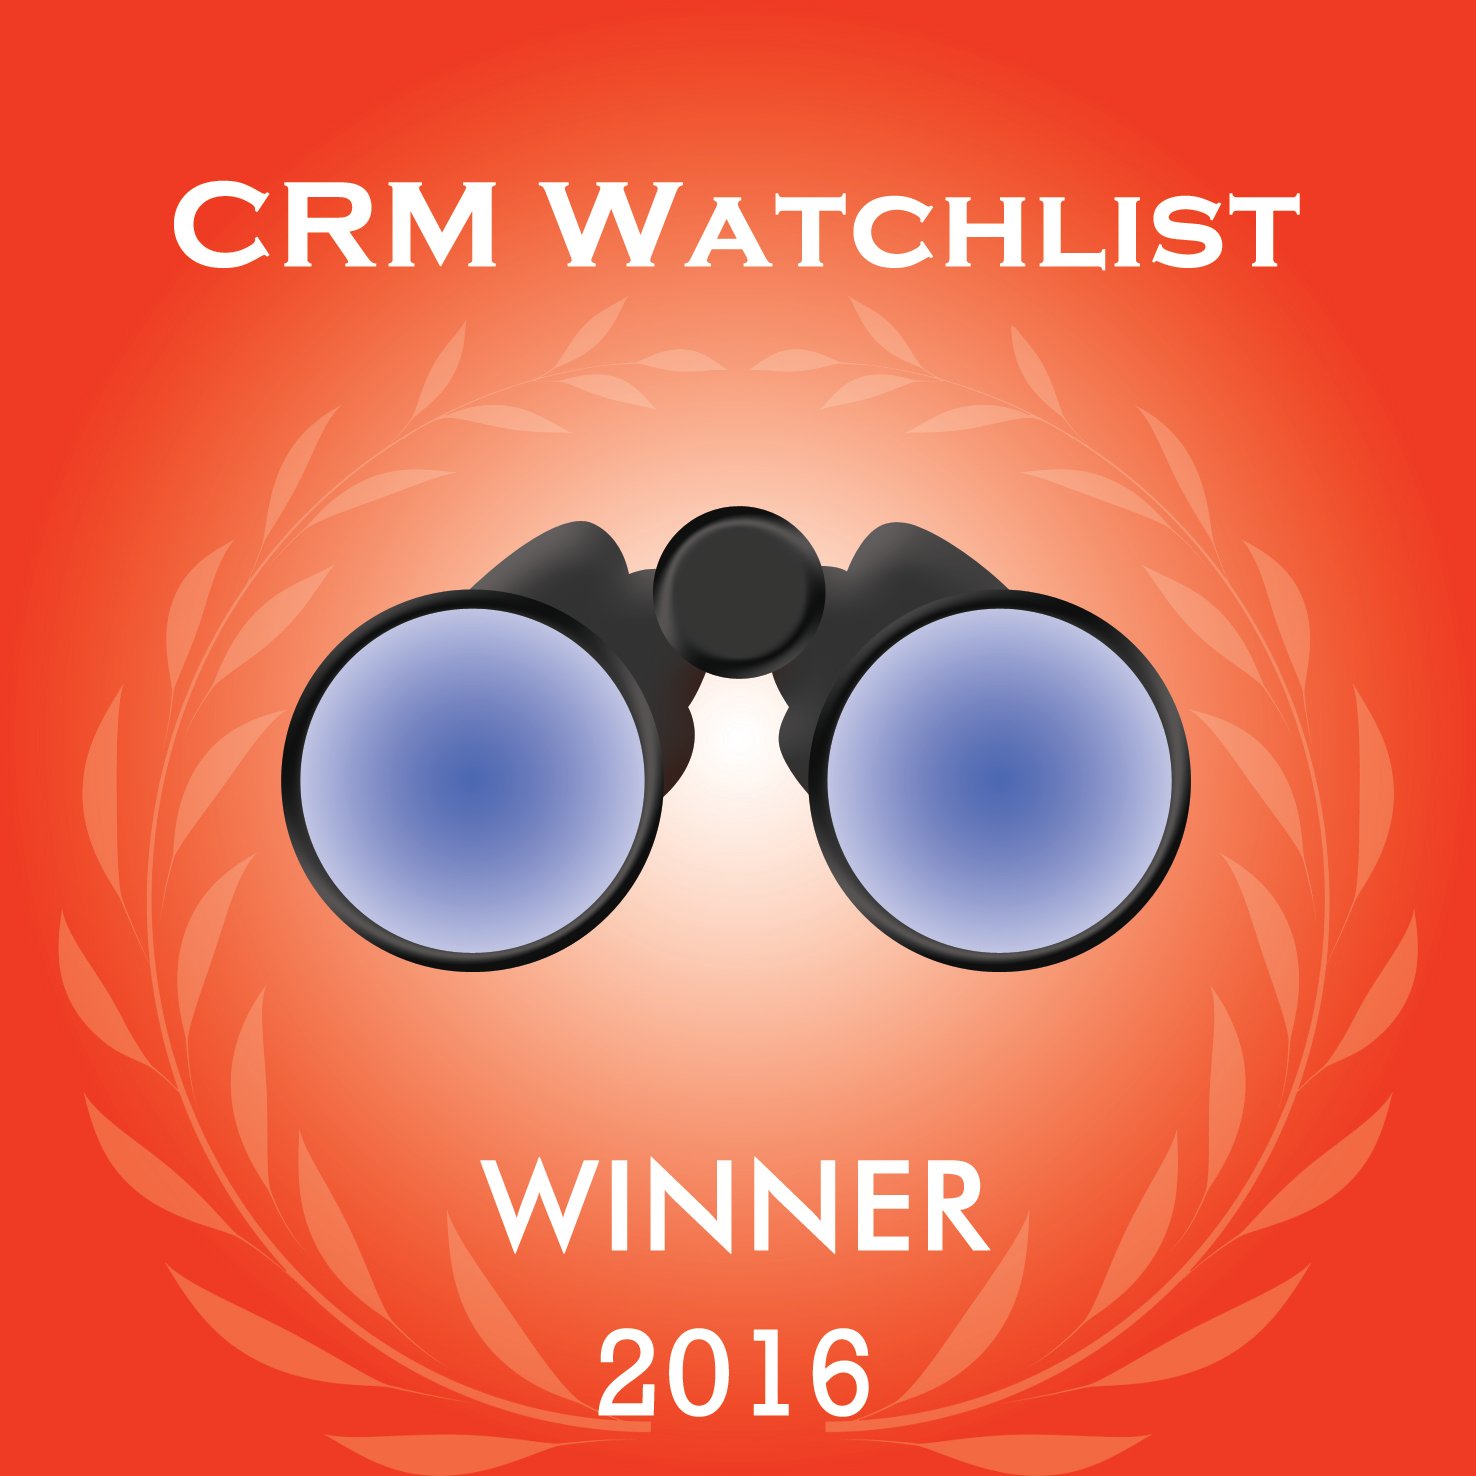 HubSpot Named Winner of 2016 CRM Watchlist